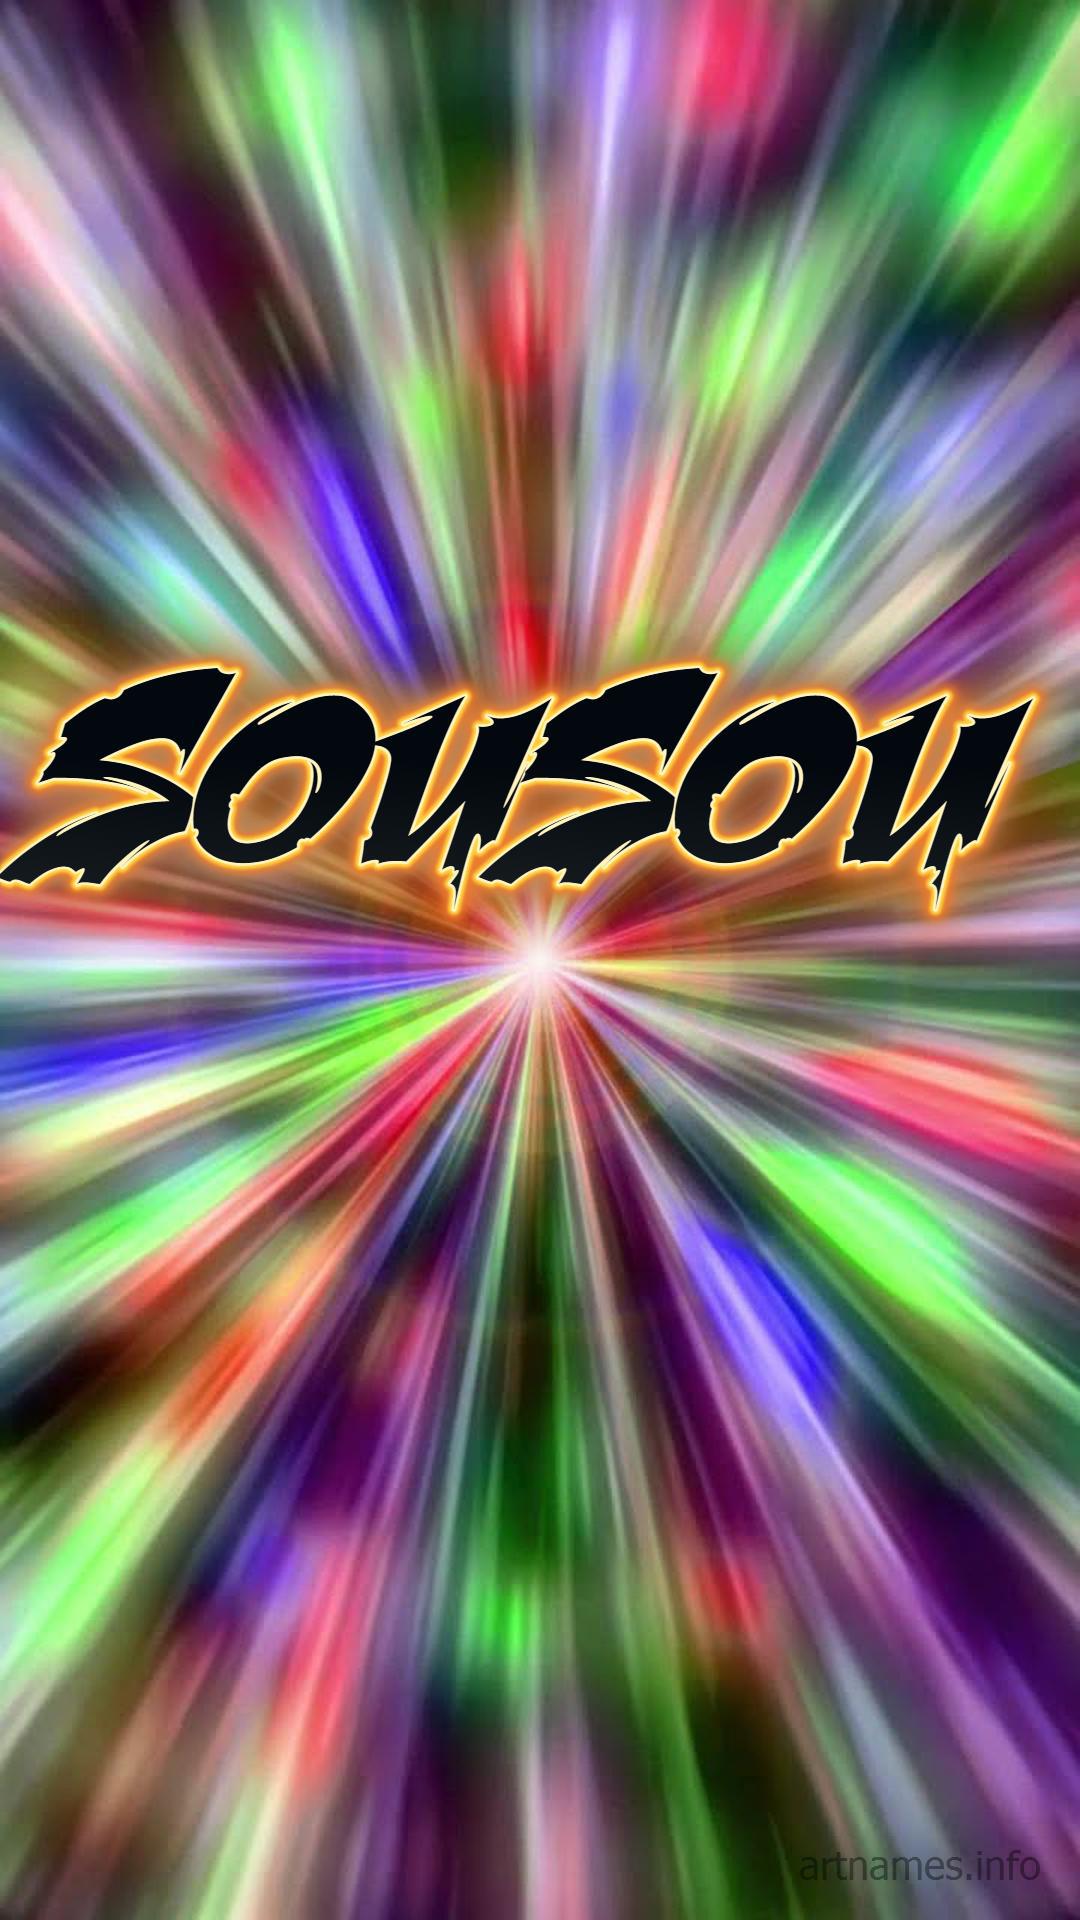 Sousou As A Art Name Wallpaper Artnames